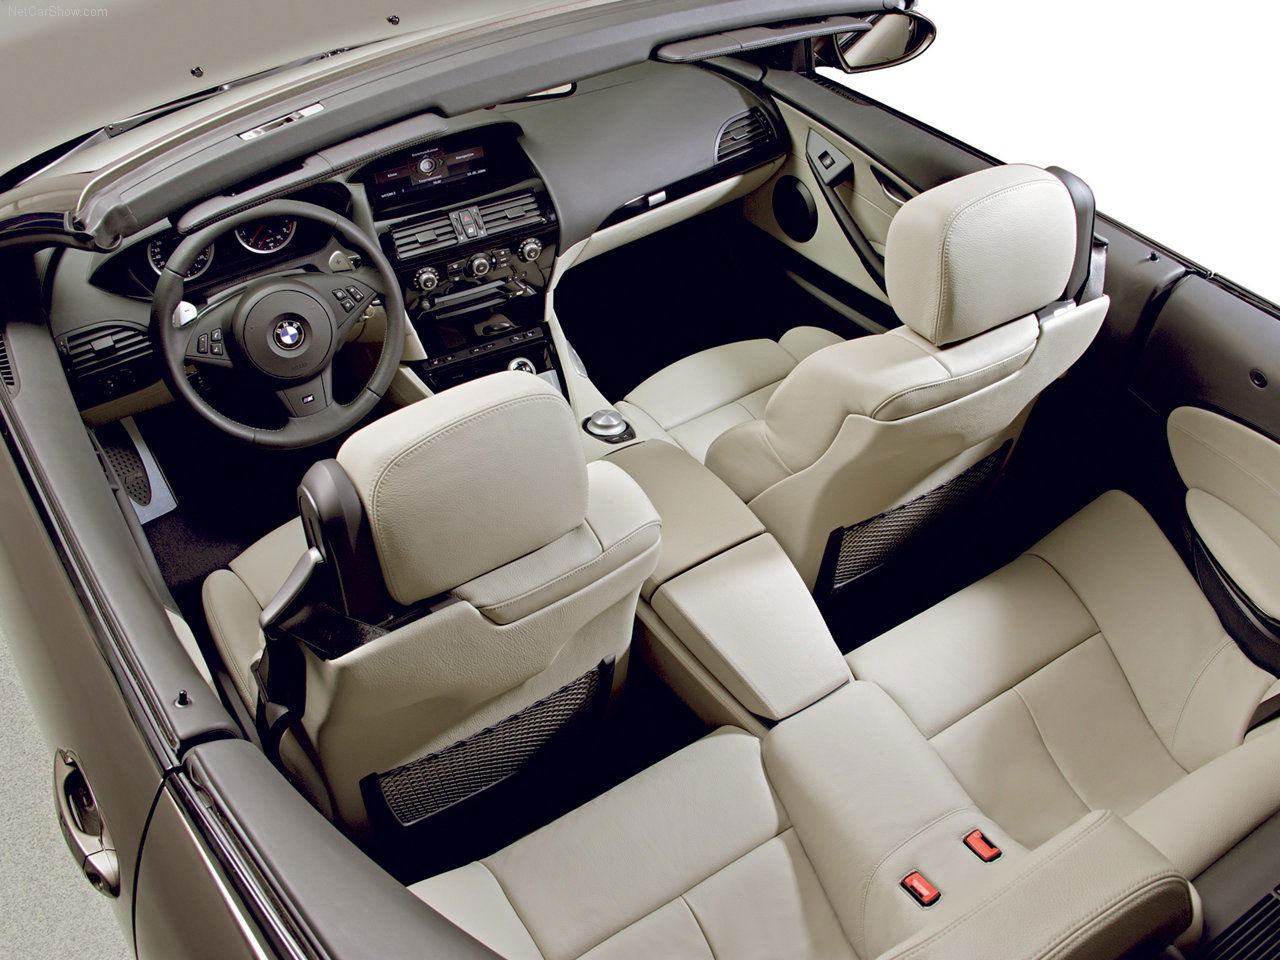 2007 BMW M6 interior.